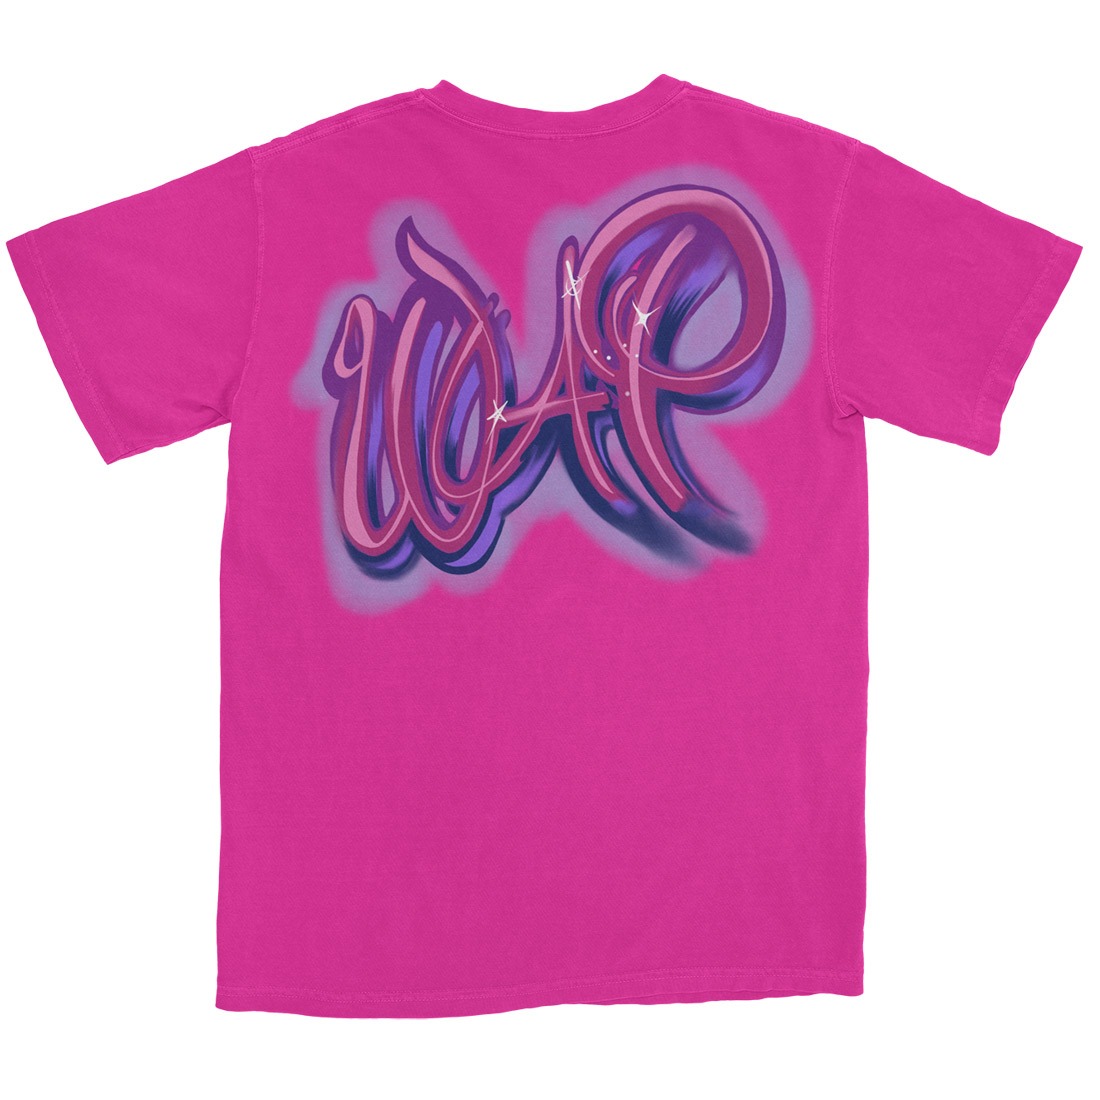 WAP Air Brush T-Shirt (Pink)